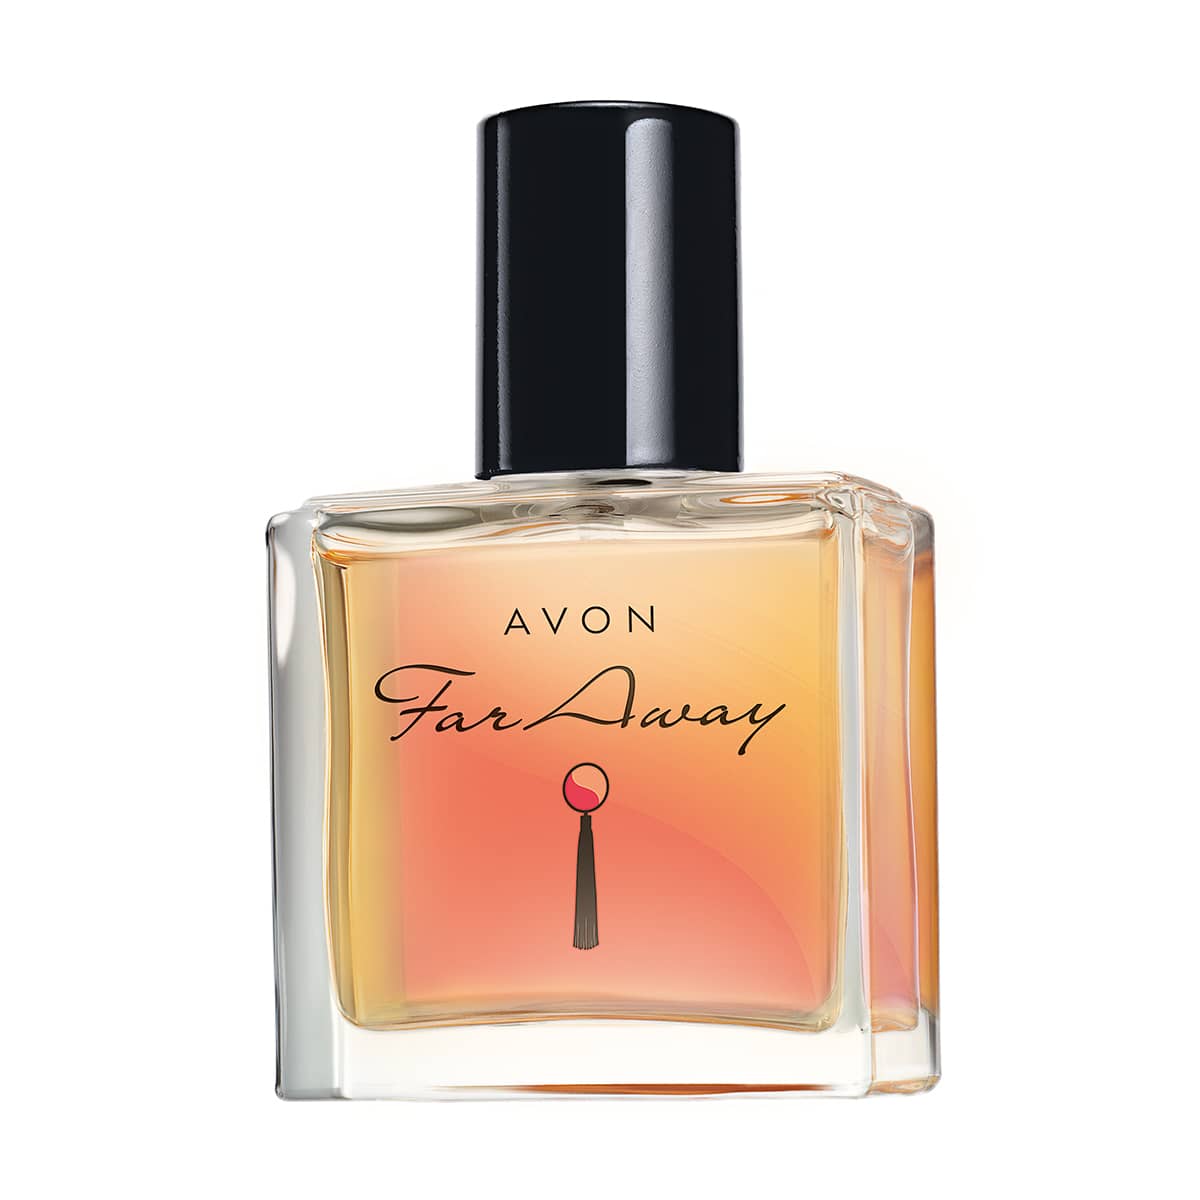 Far Away Eau de Parfum Travel Size 30ml